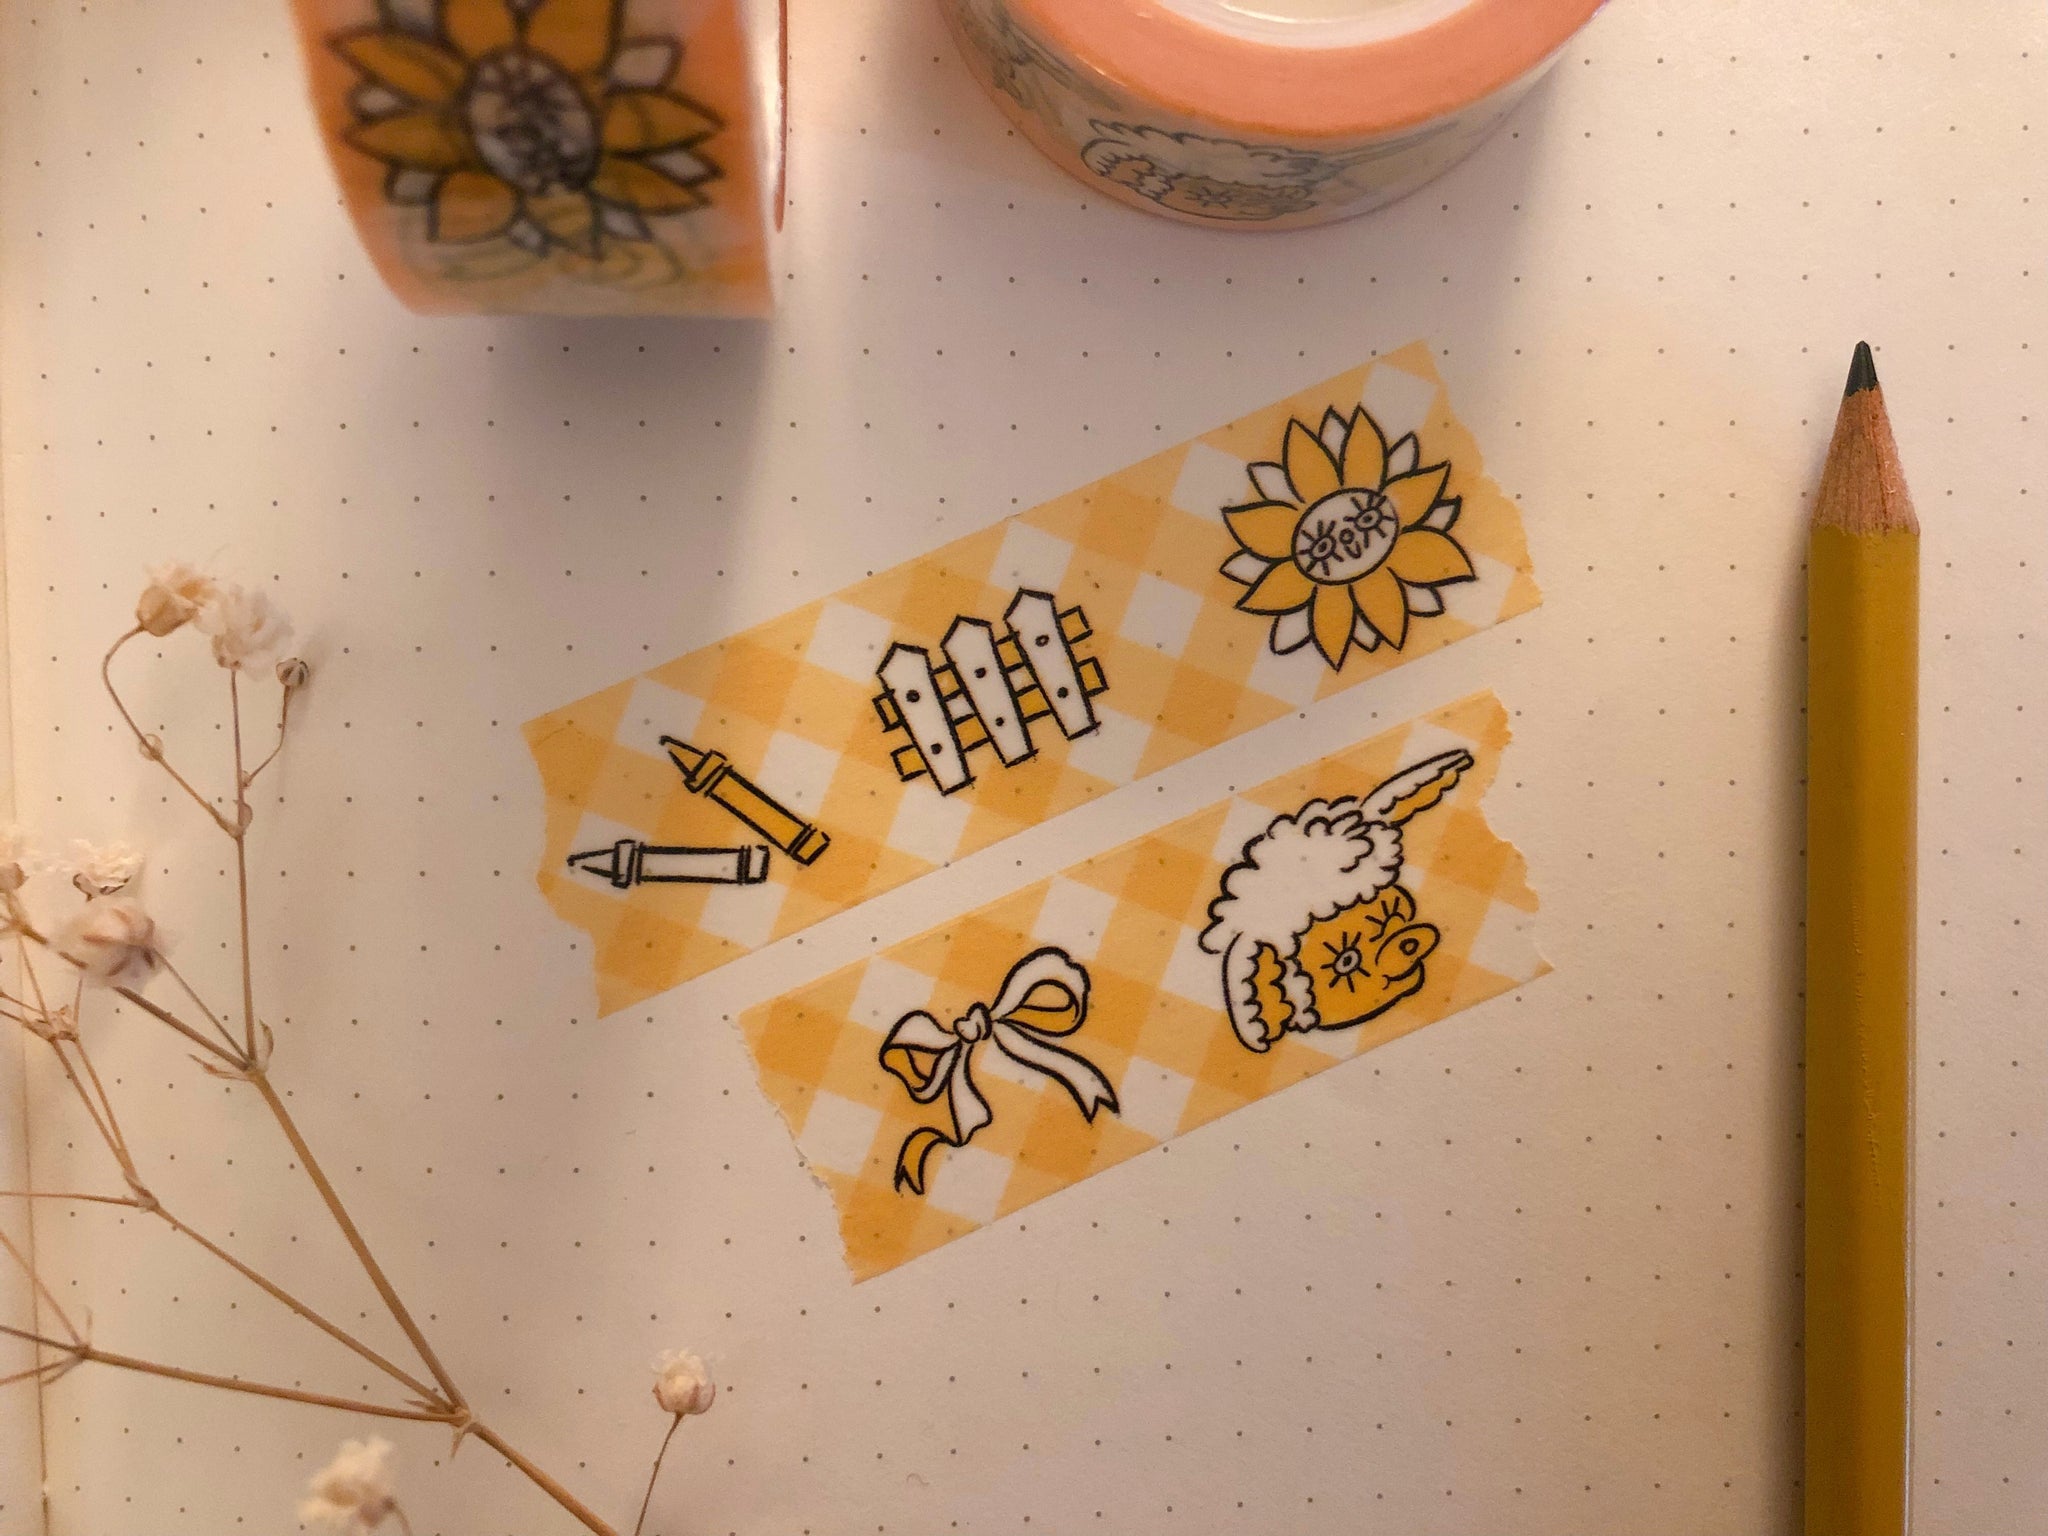 The Cutest Washi Tape Around😍✨🙌 #kawaii #scrapbooking #doodles